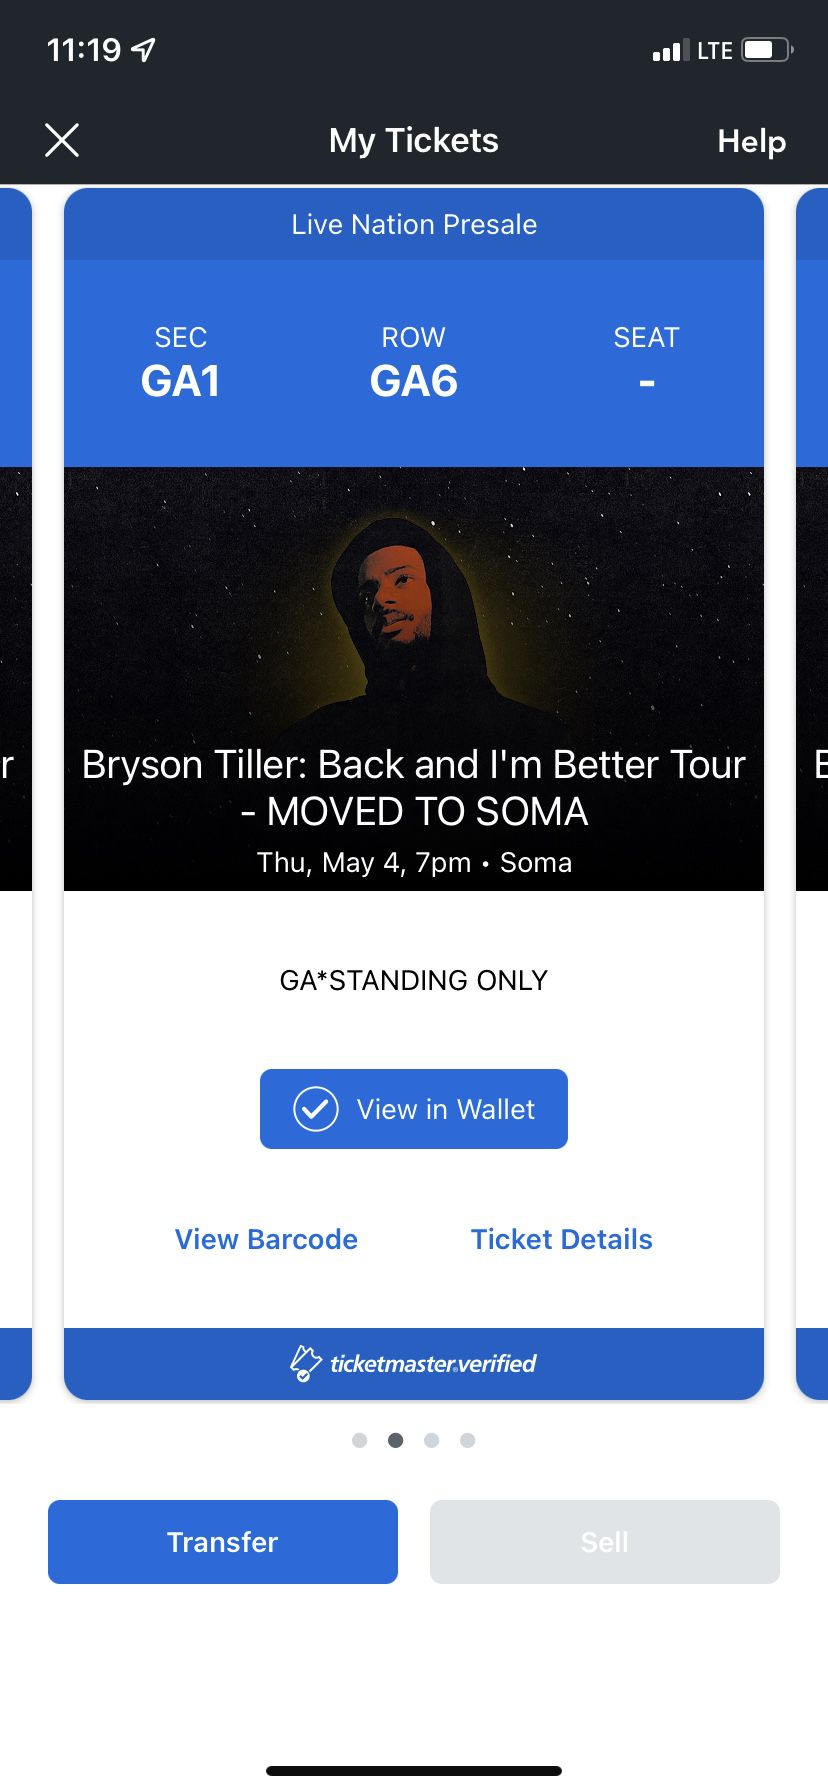 Bryson Tiller May 4th San Diego Tickets